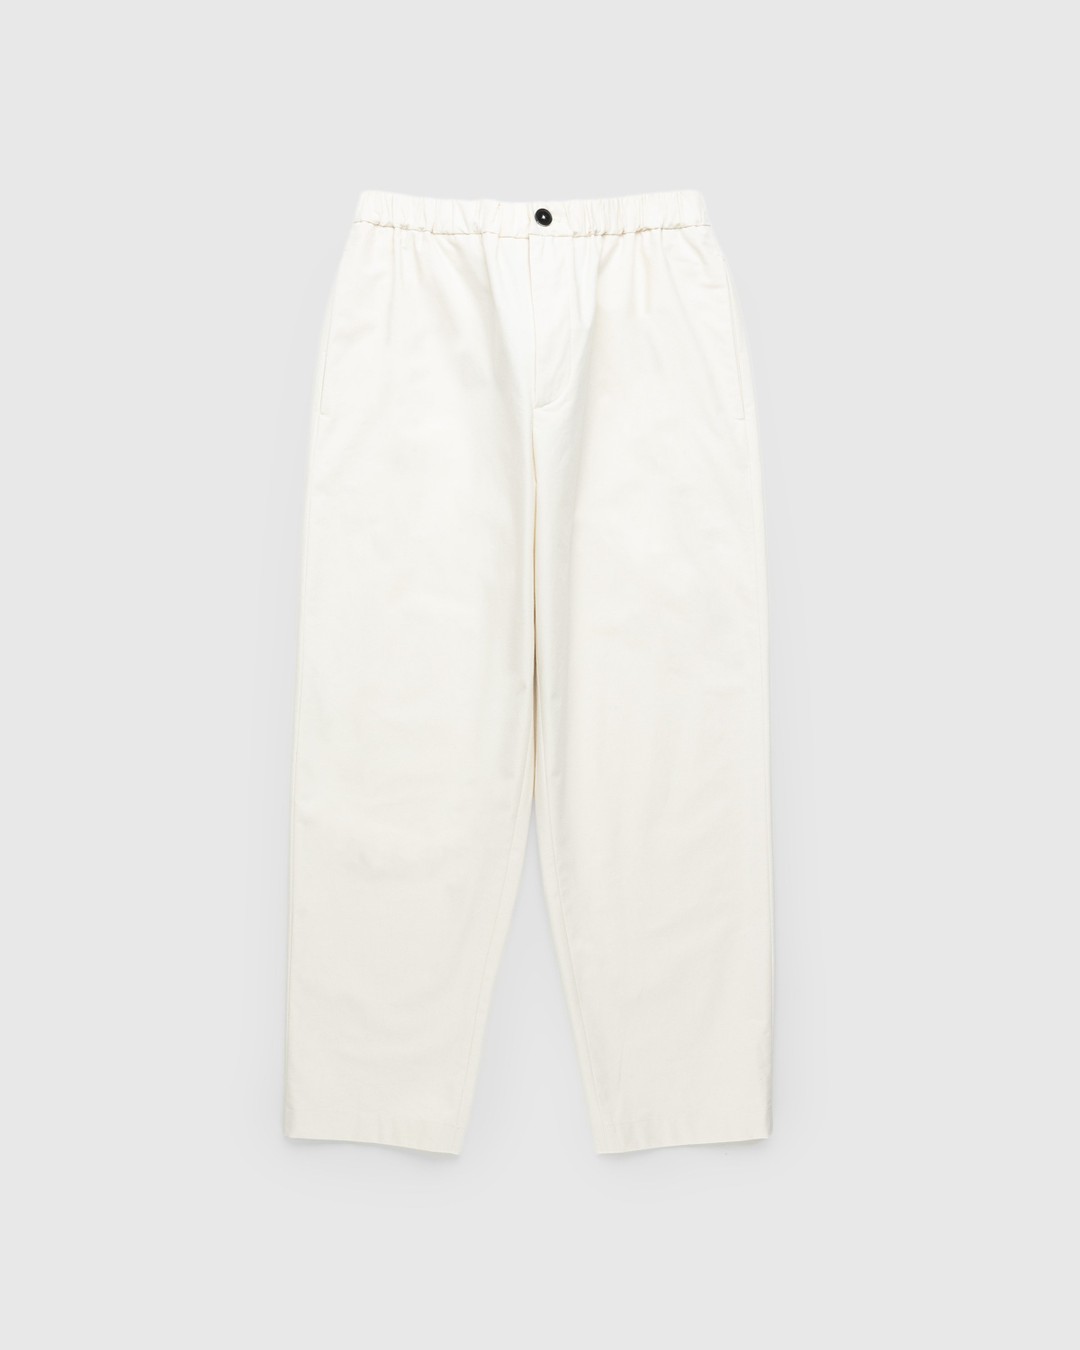 Jil Sander – Cropped Straight Leg Trousers Beige - Pants - Beige - Image 1